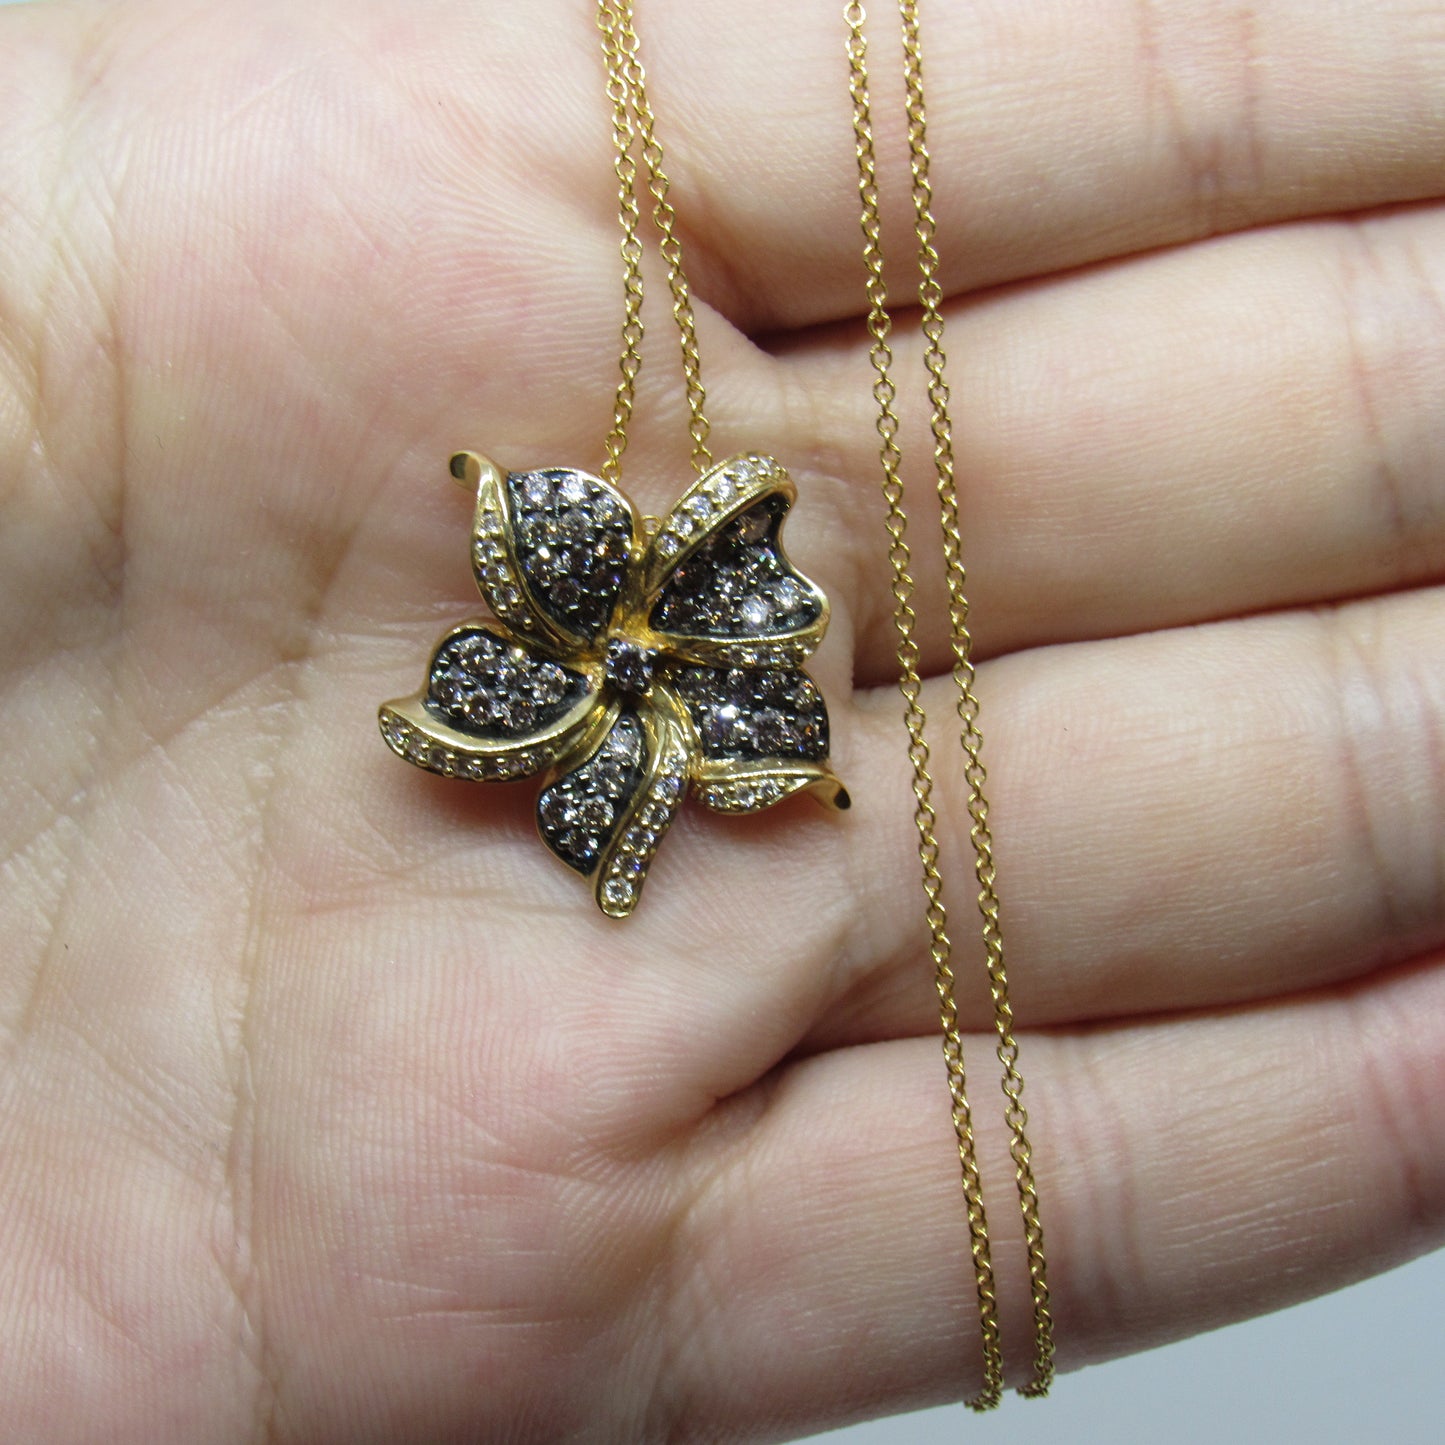 LeVian 14k Chocolate & White Diamond Flower Pendant Necklace - 18 in